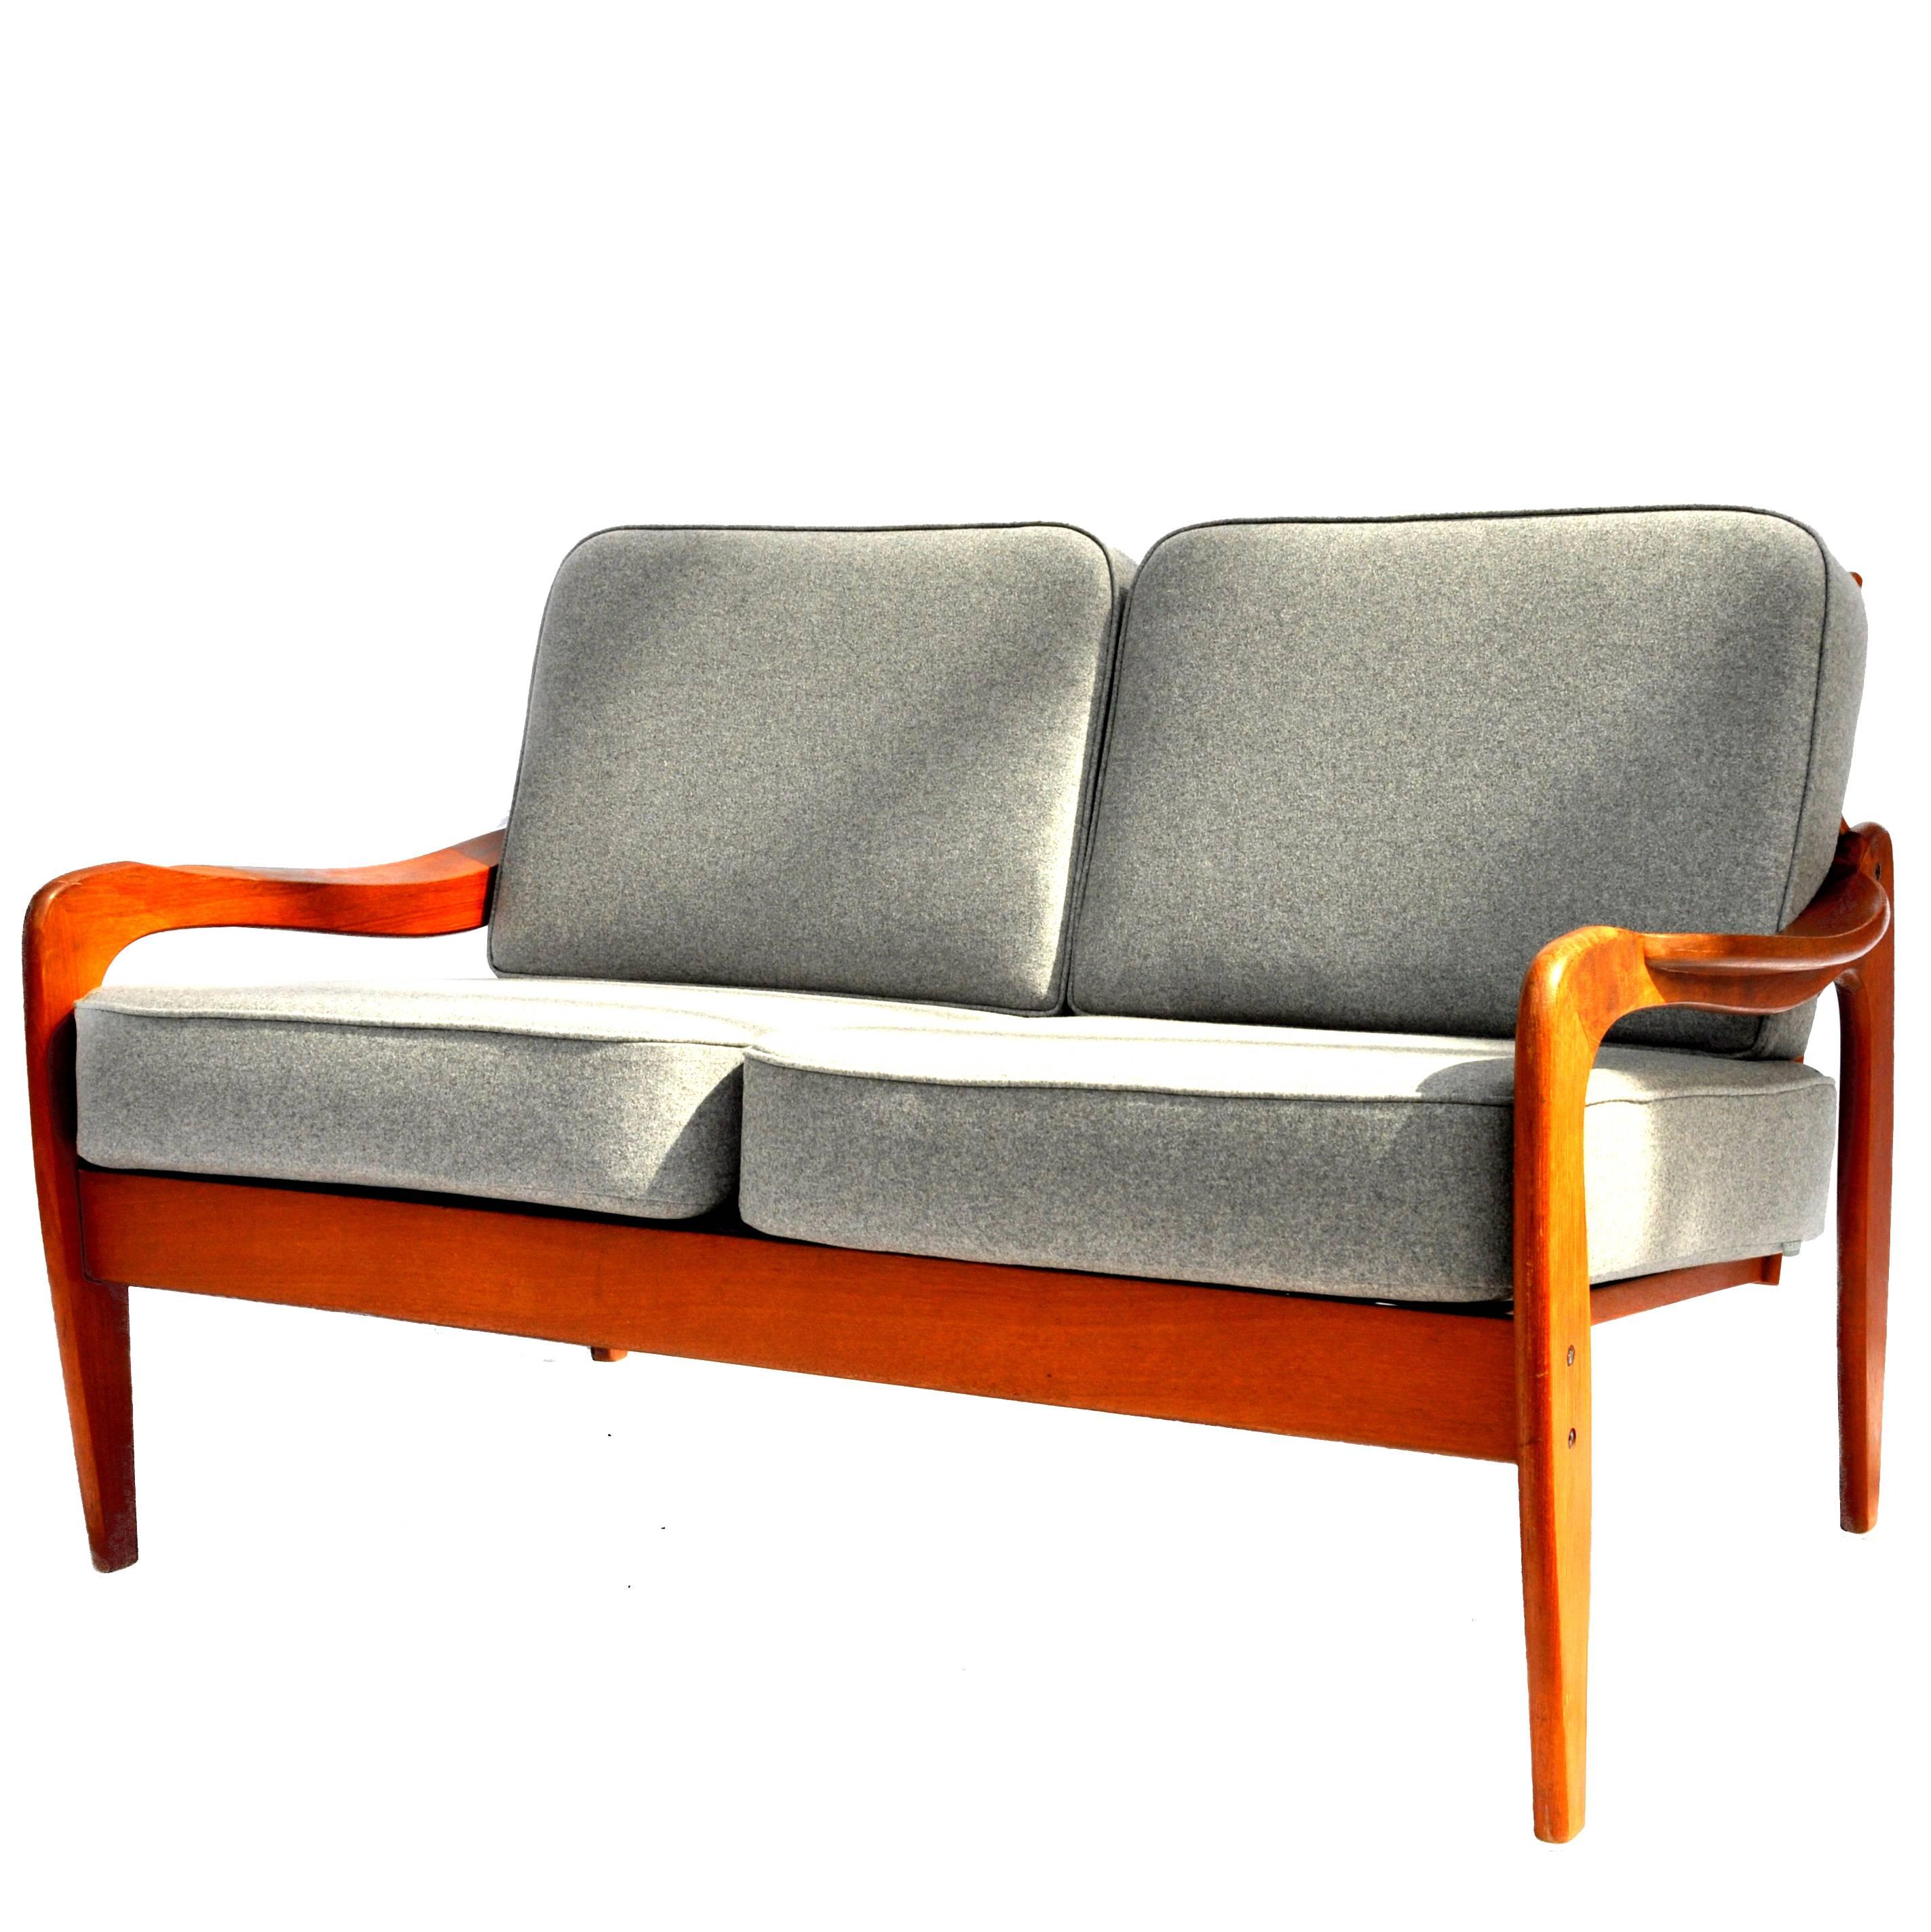 Scandinavian Modern Two-Seat Teak Sofa from Komfort For Sale